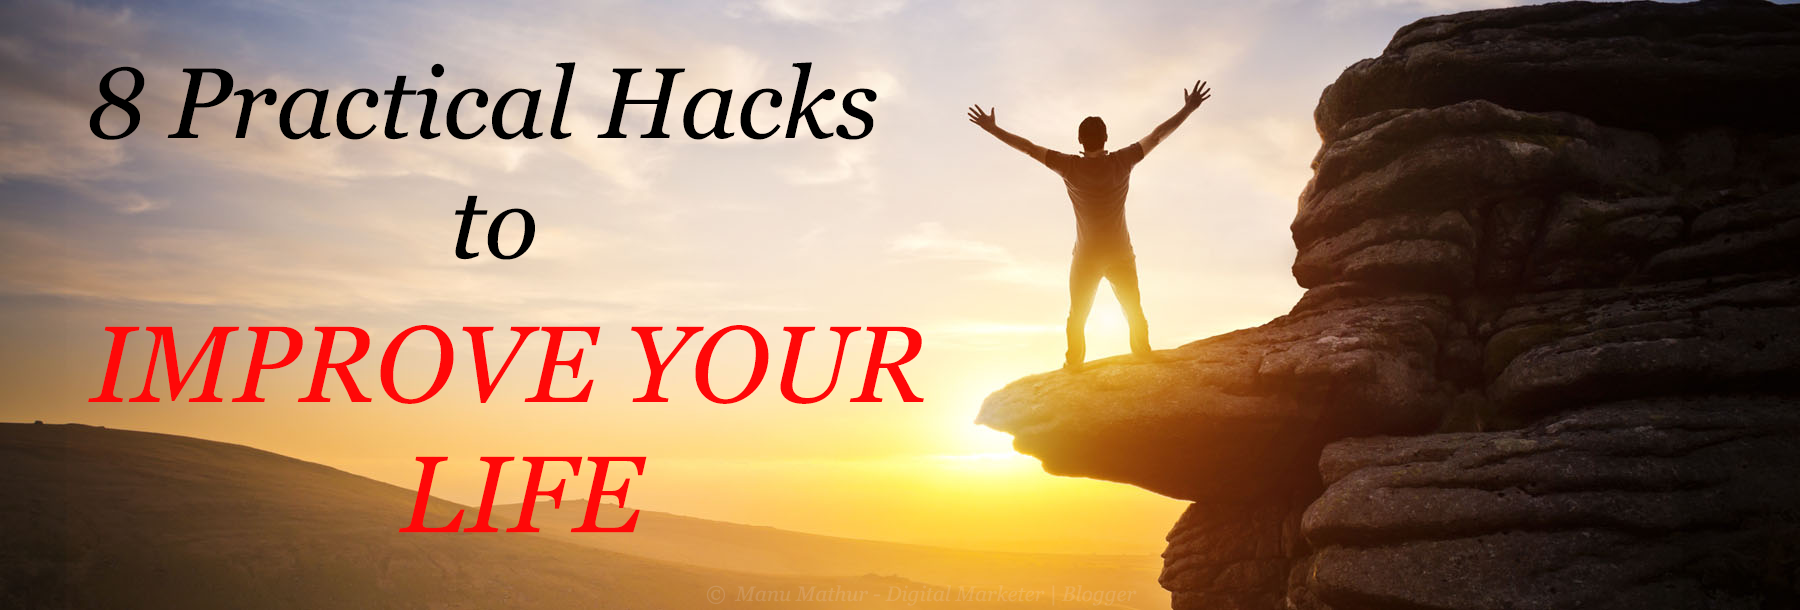 improve-your-life-practical-hacks